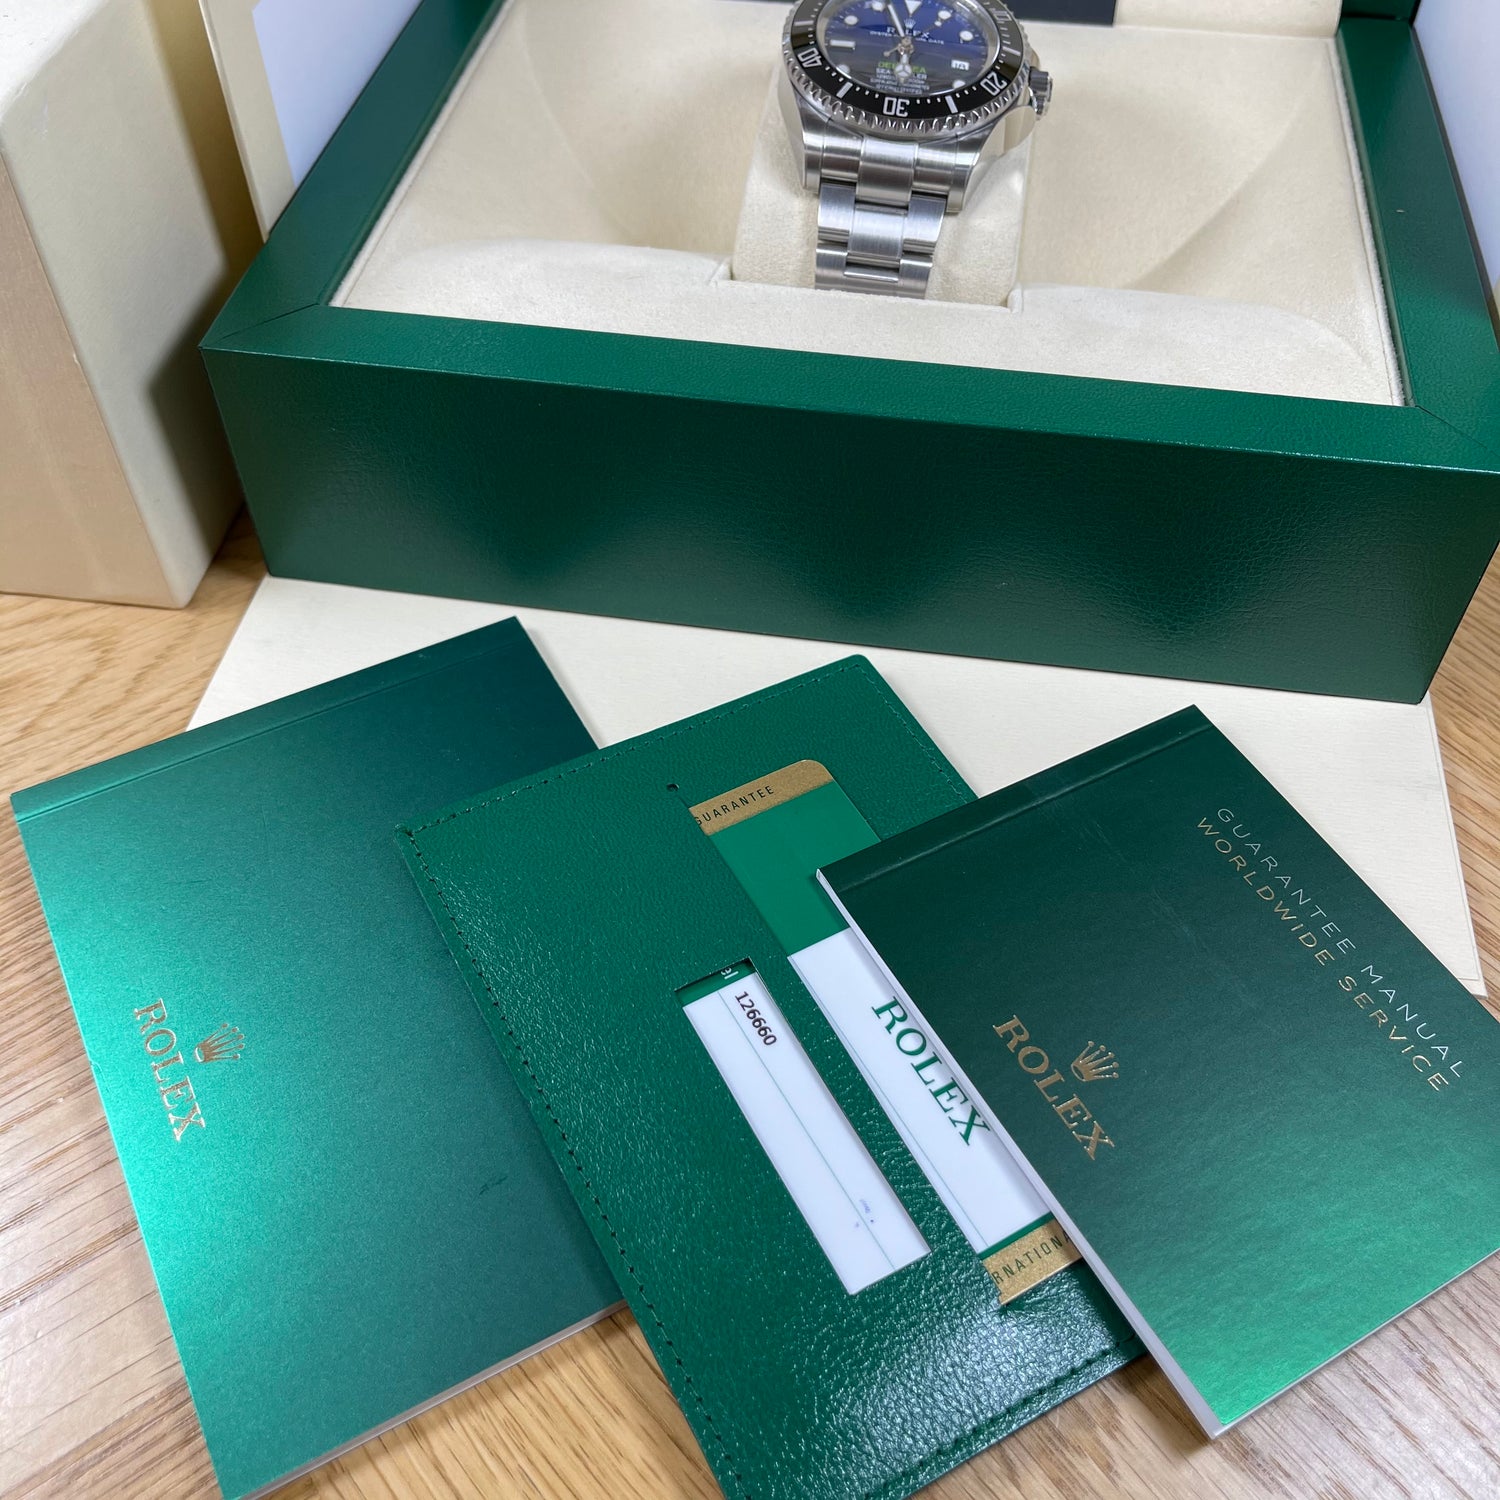 Rolex DeepSea James Cameron 126660 2021 Brand New Full Set Watch